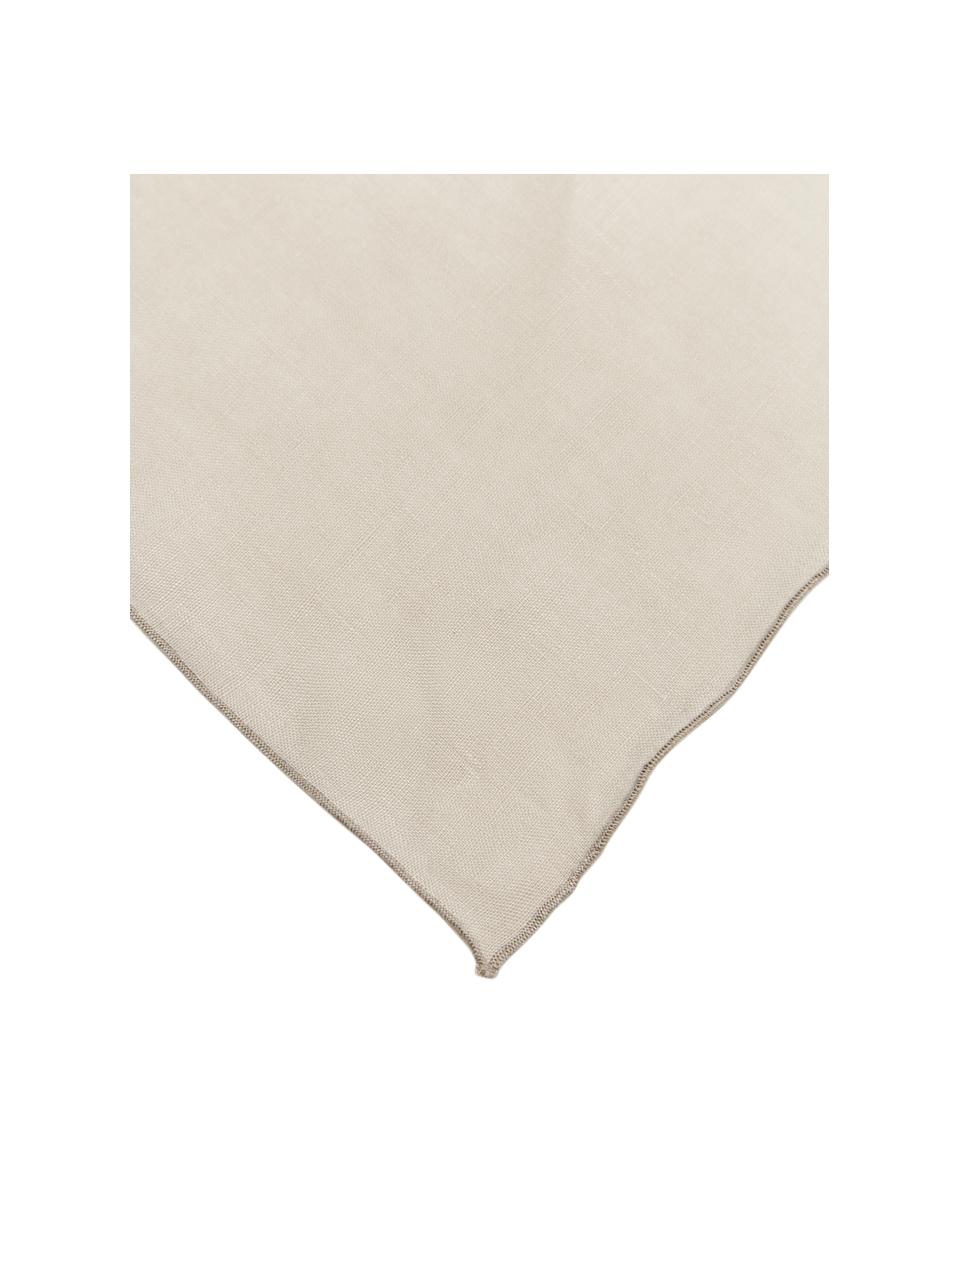 Mantel de lino con ribete Kennedy, 100% lino lavado con certificado European Flax, Beige, An 140 x L 250 cm